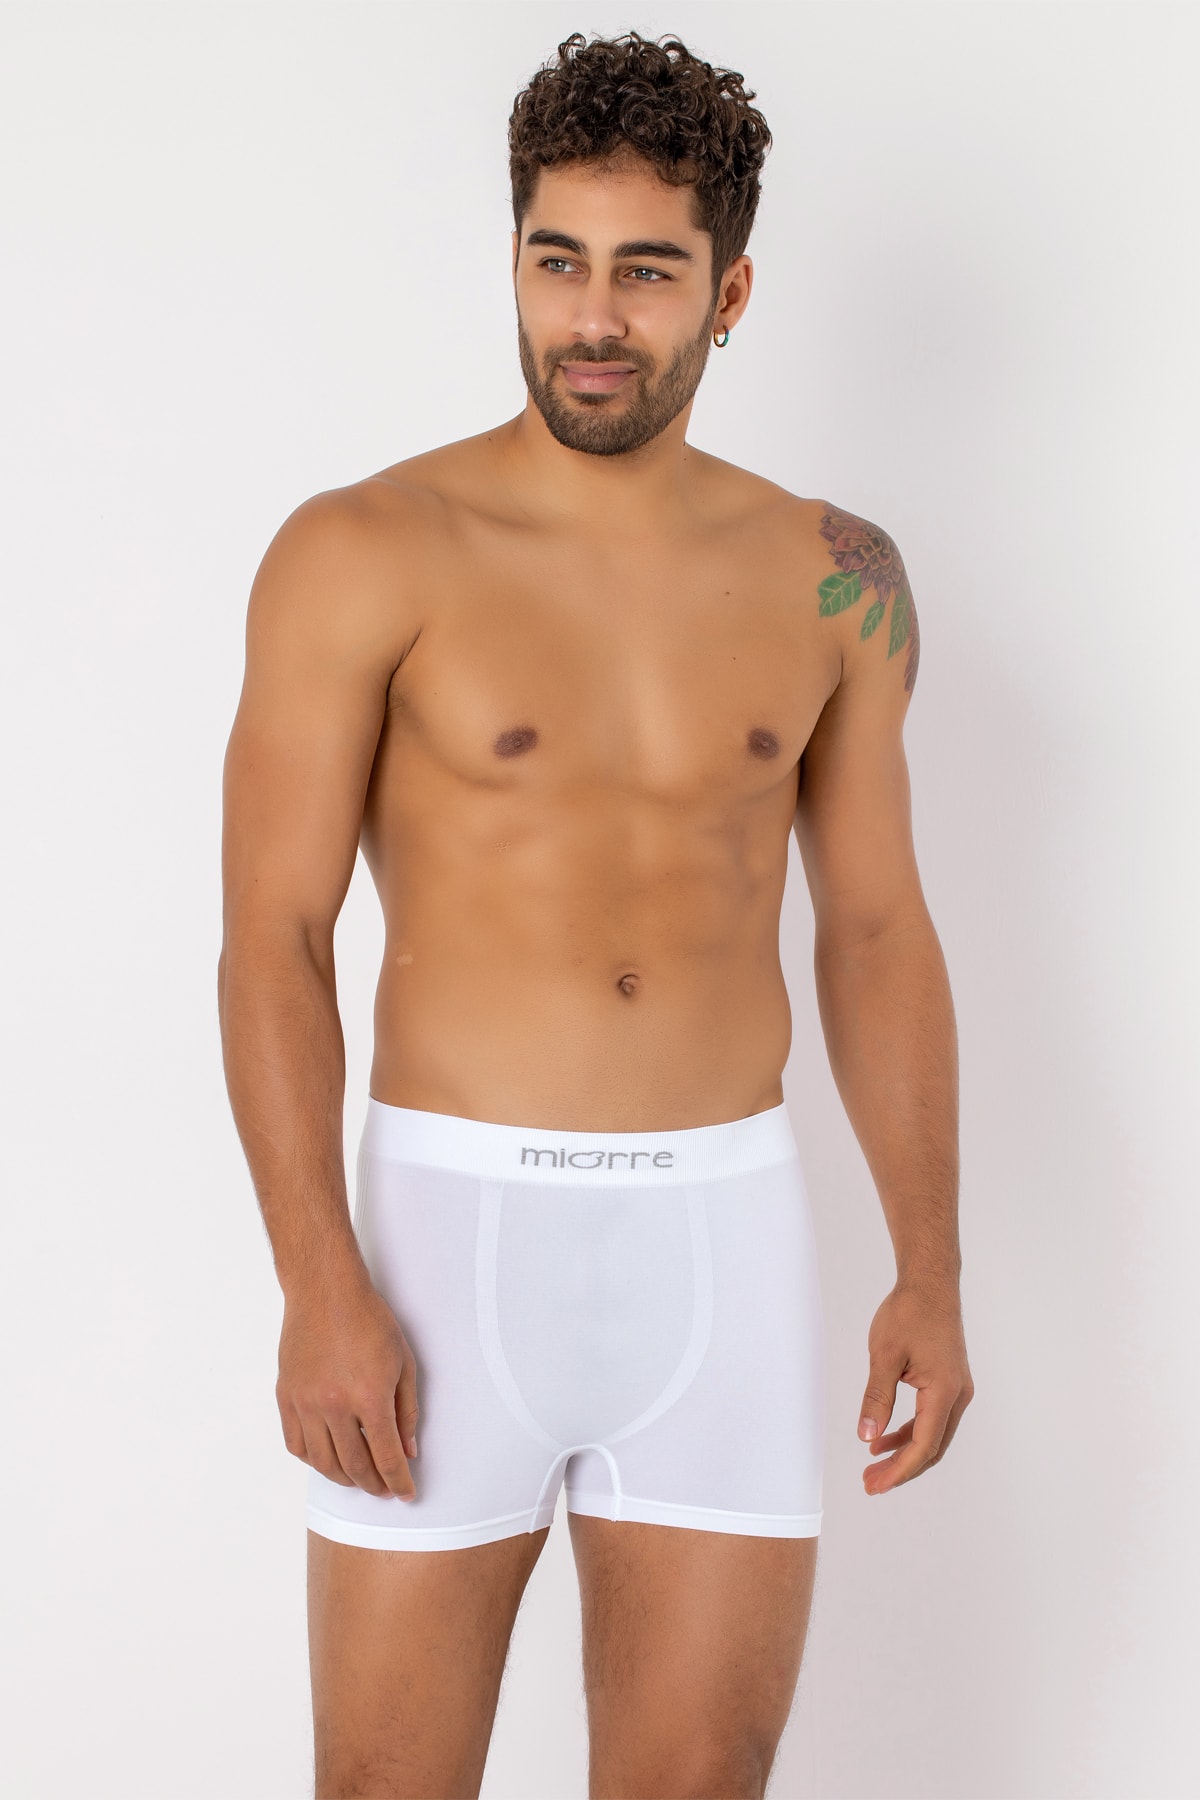 Miorre Boxer Shorts - White - Single pack